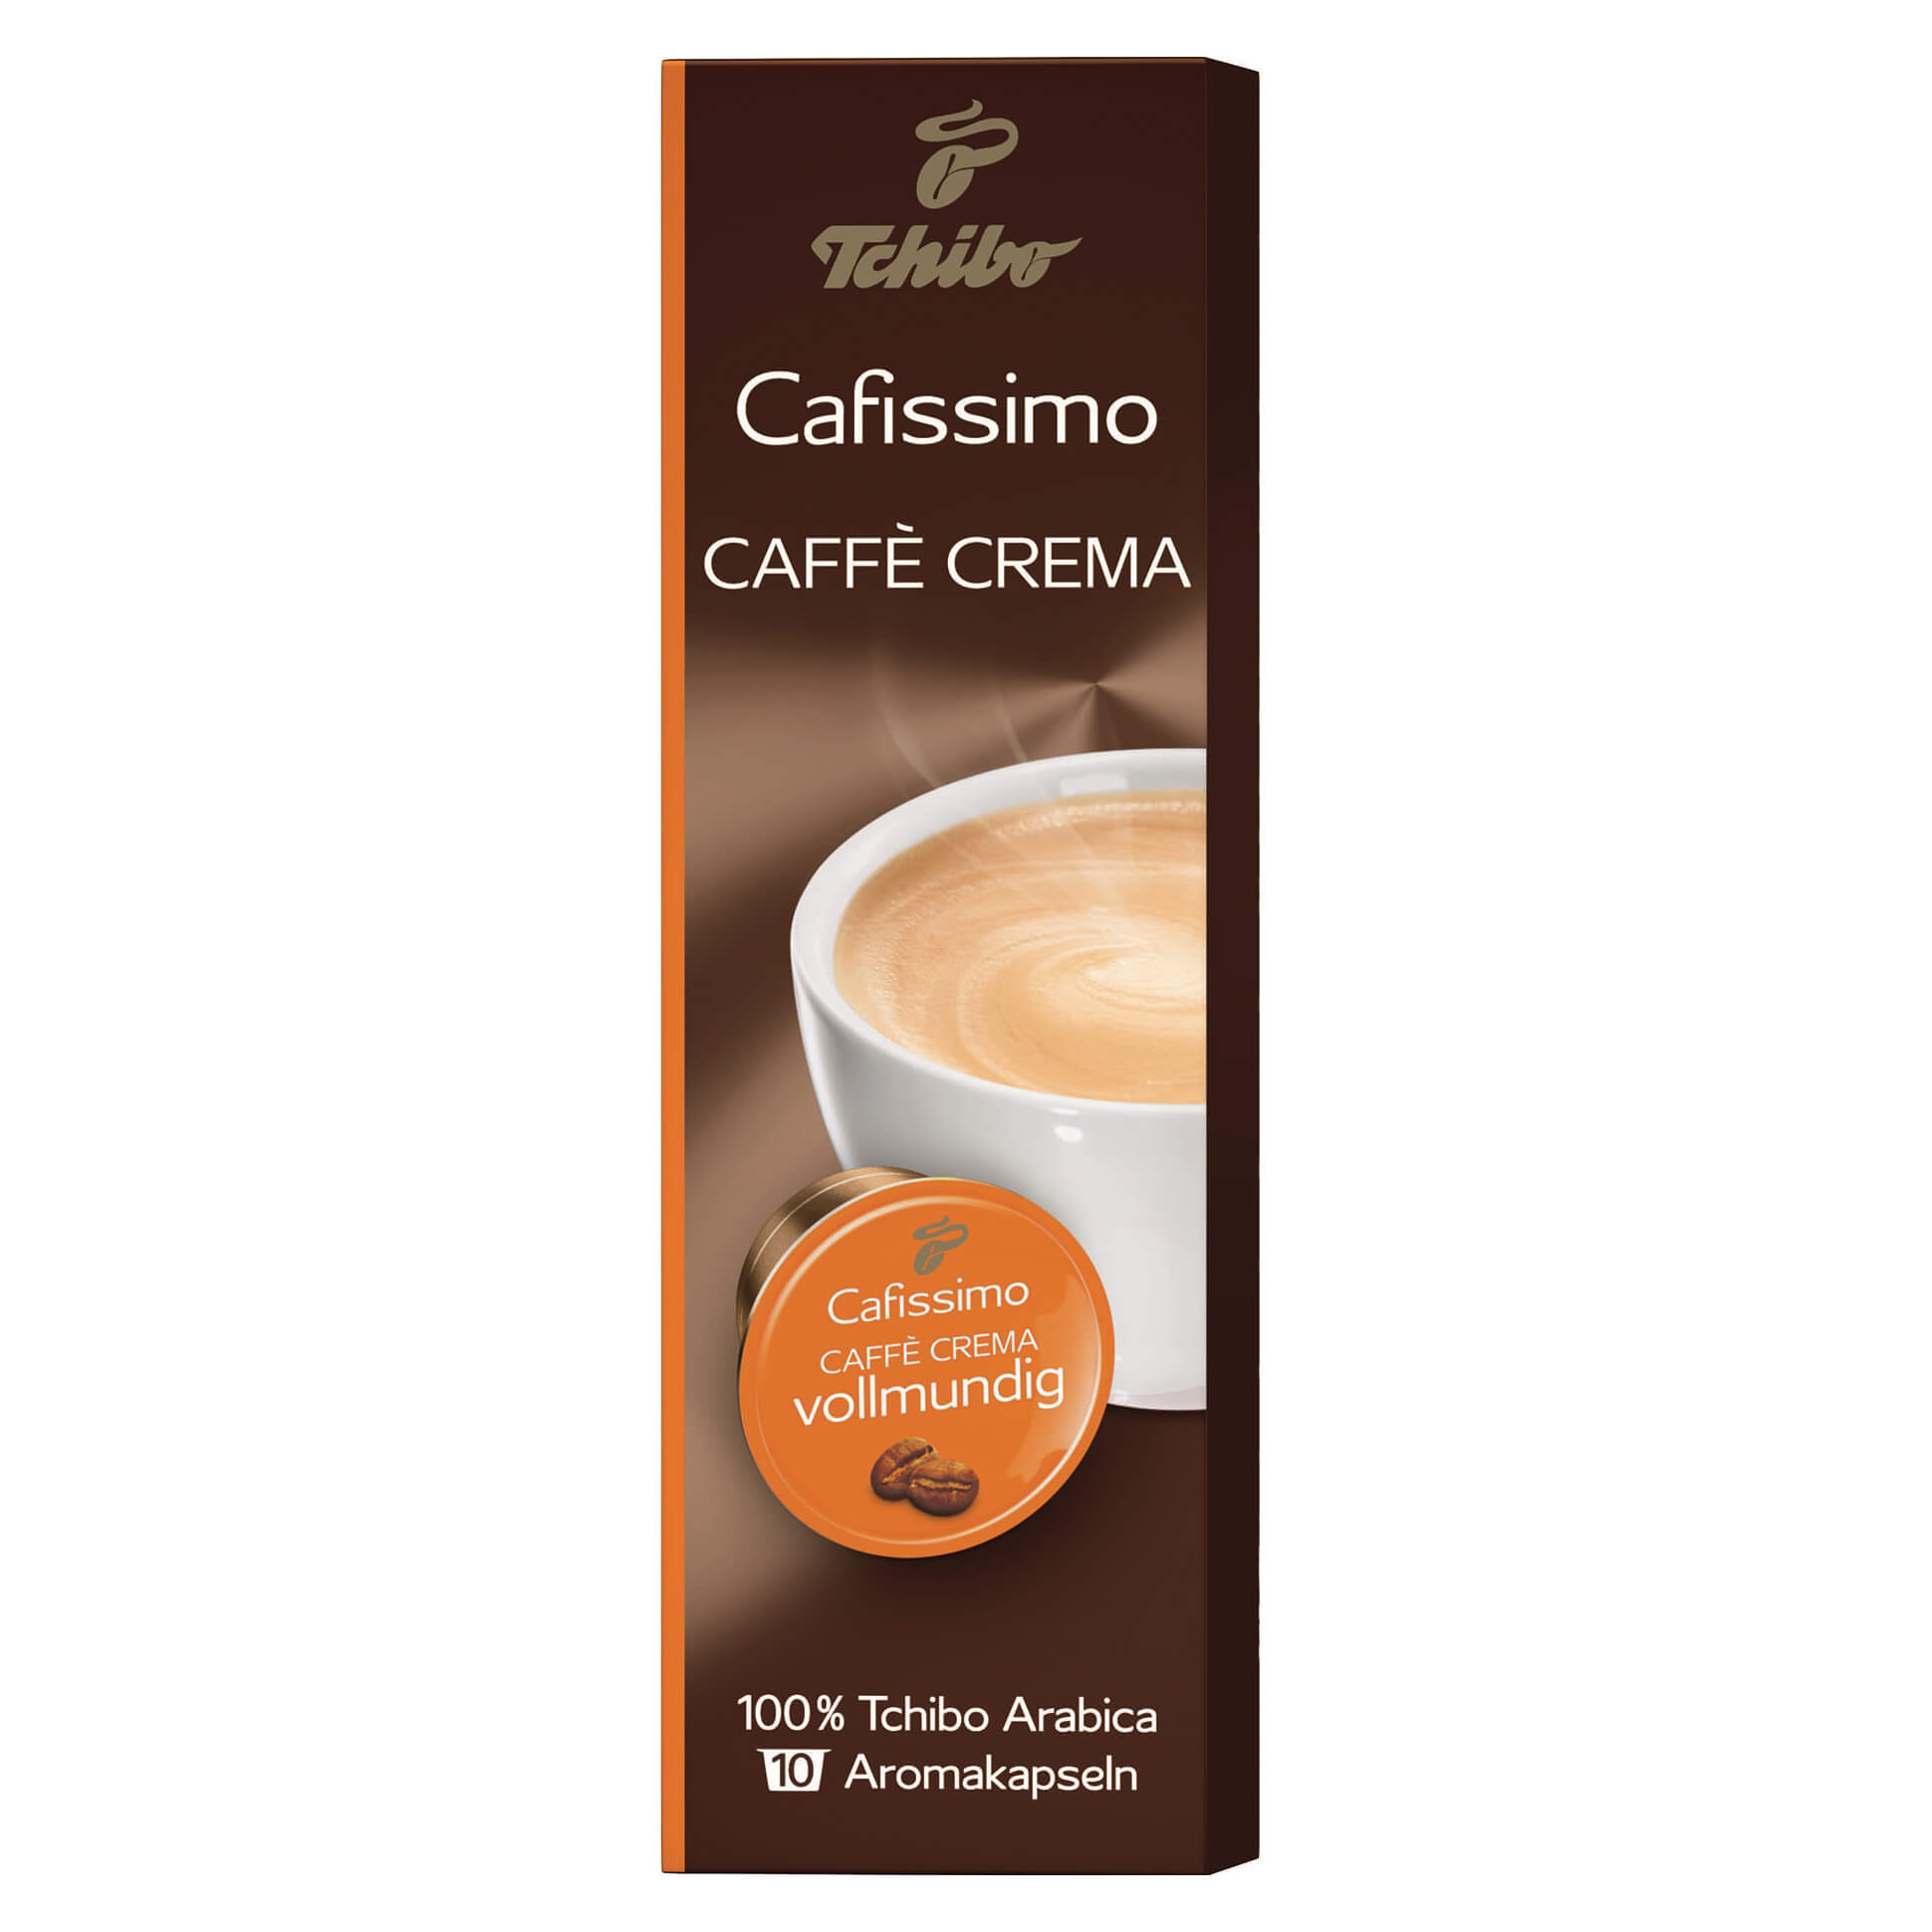  Capsule Tchibo Cafissimo Caffe Crema Vollmundig, Cafea cu aroma de caramel, 10 Capsule, 80 g 